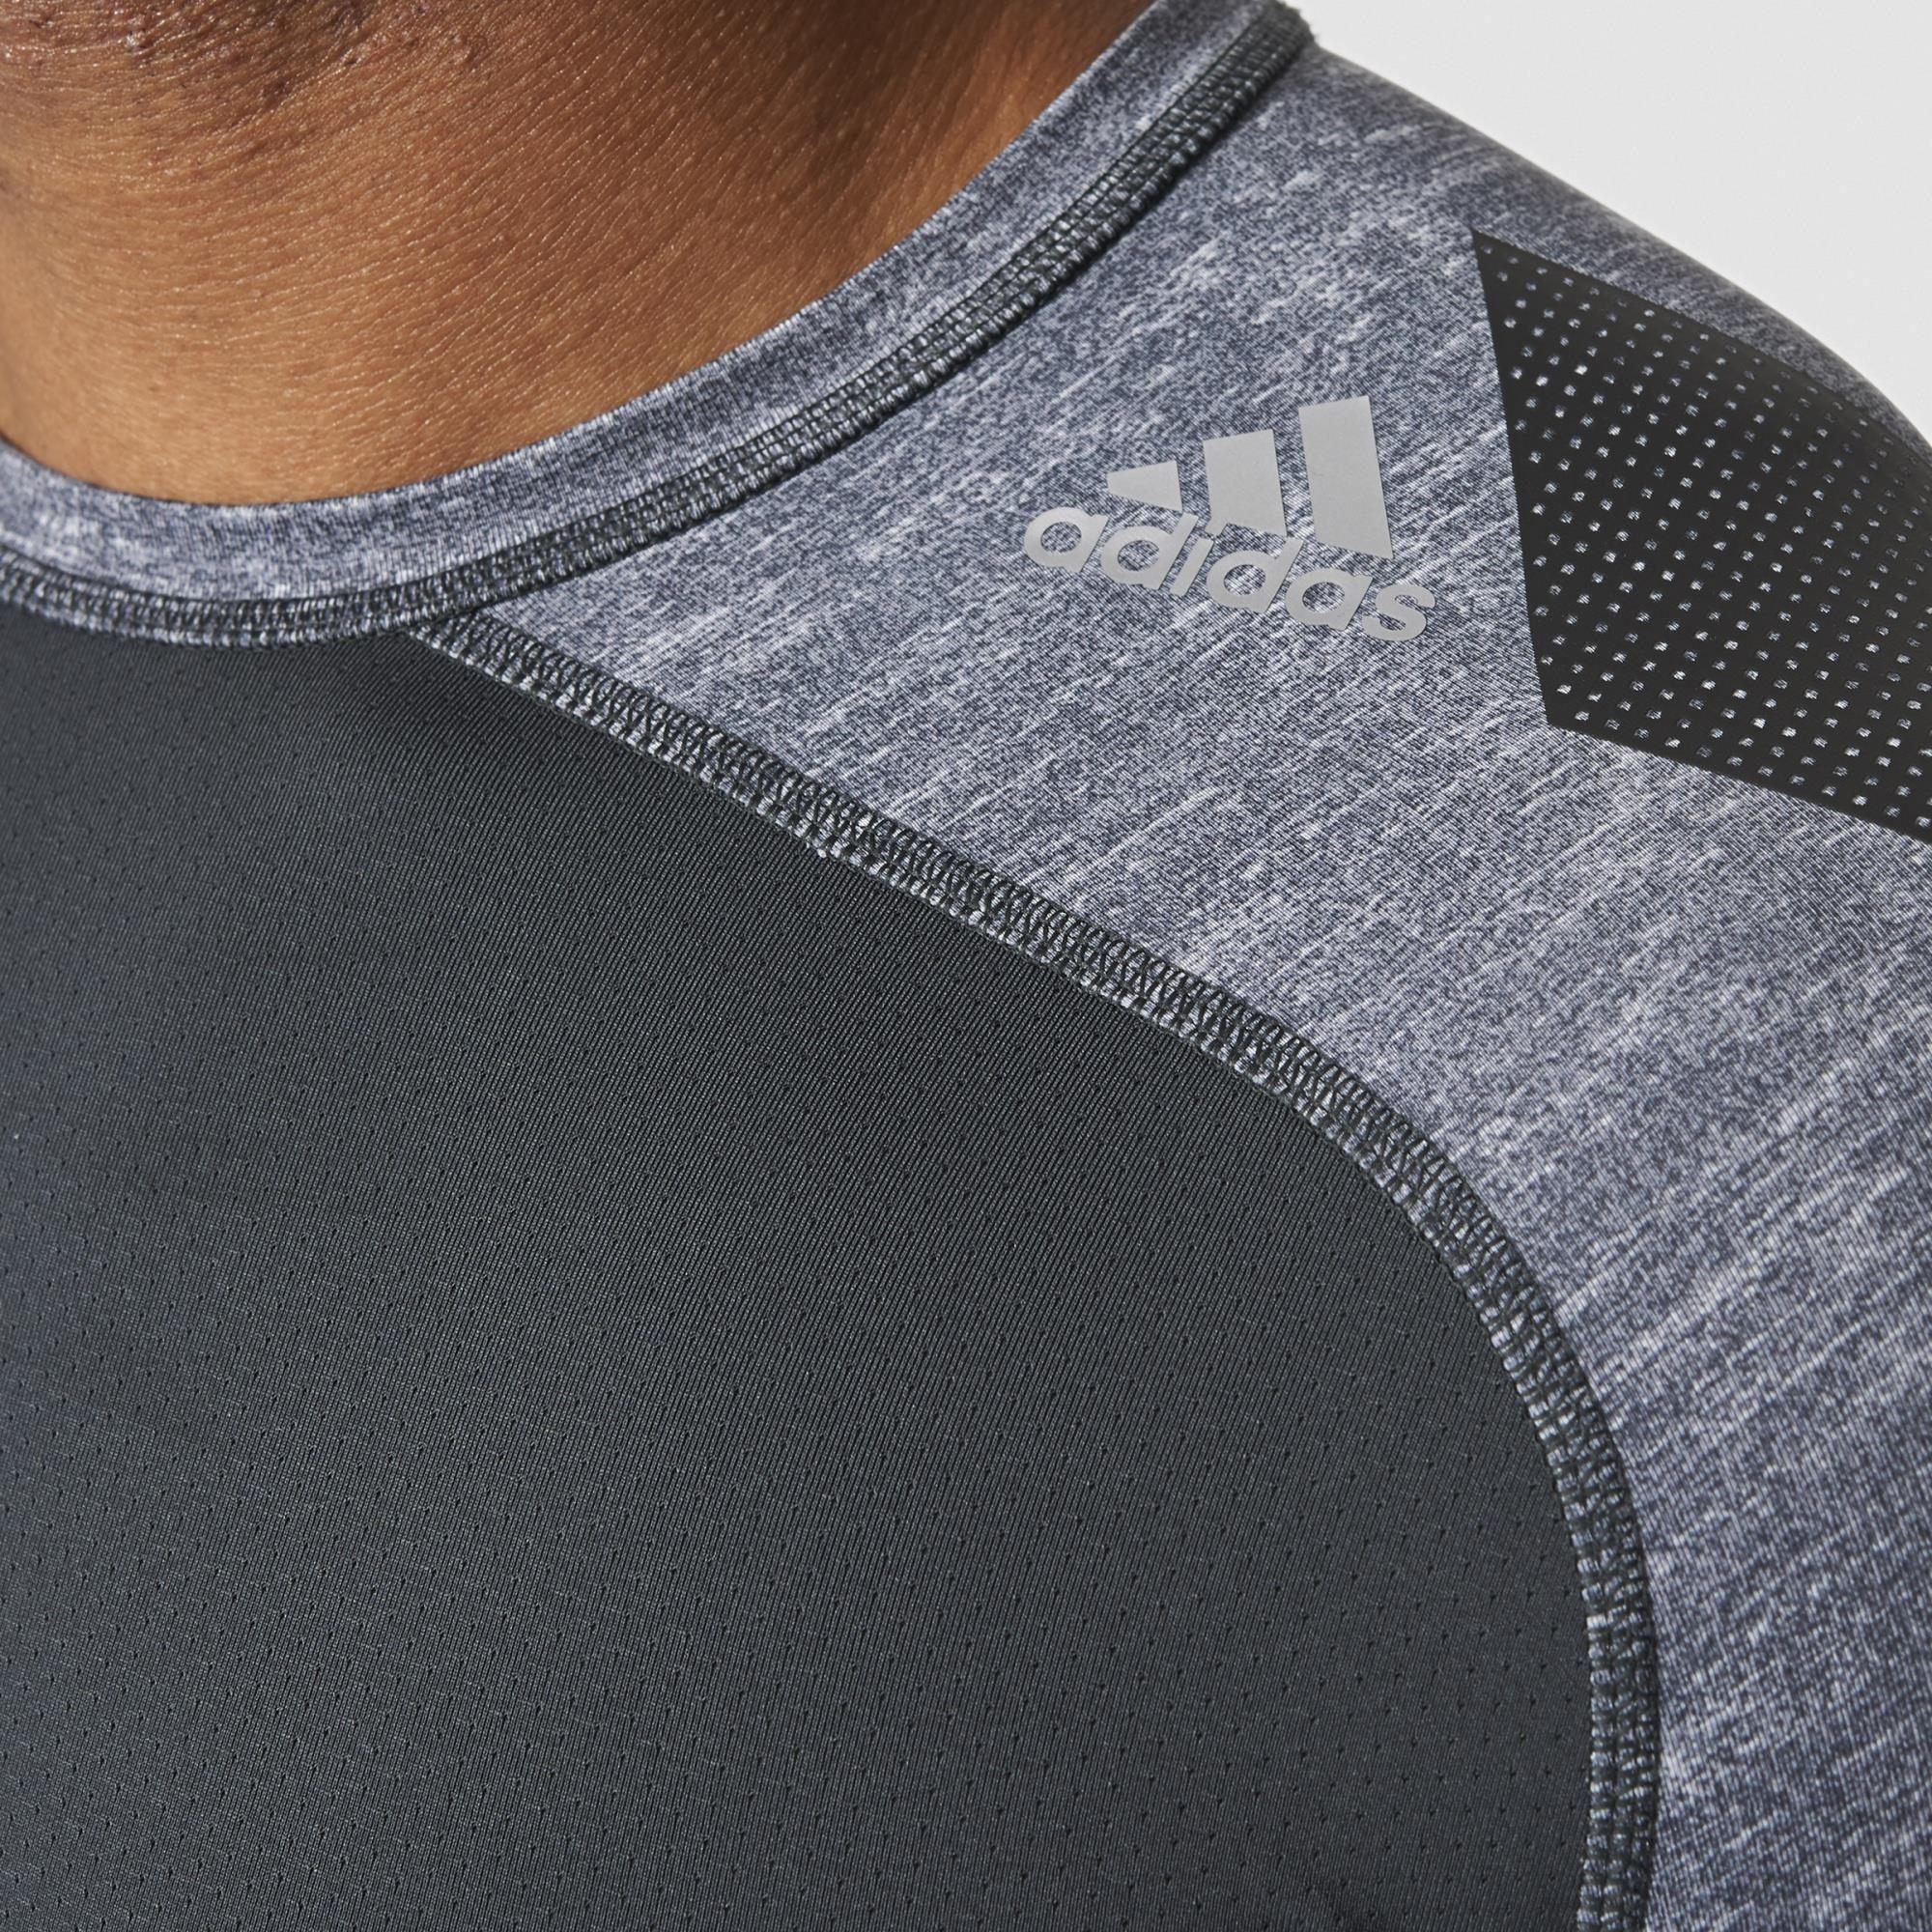 Adidas Mens Techfit Cool Short Sleeve Top - Dark Grey/Black ...